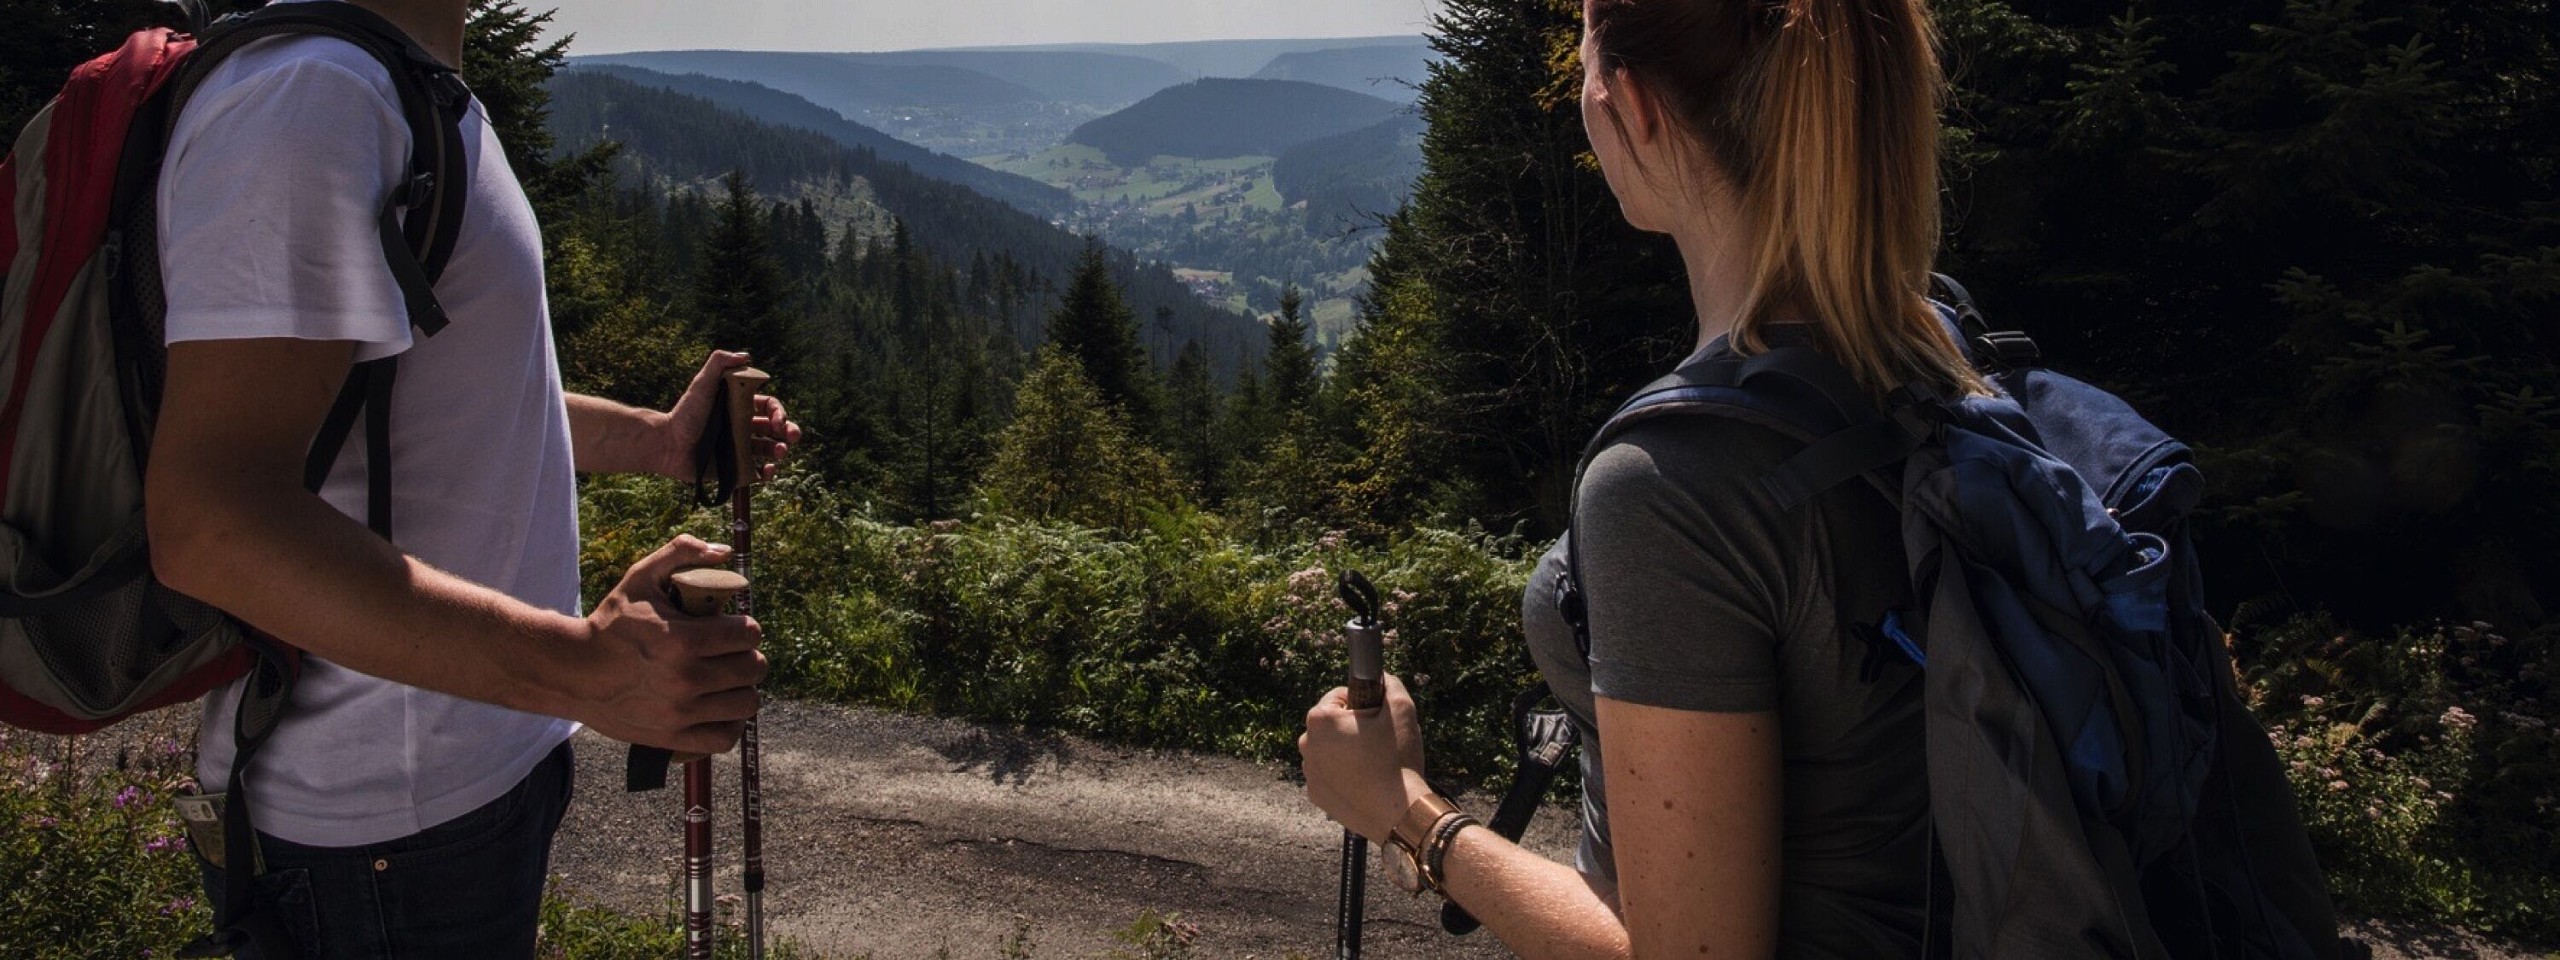 Zwei Wanderer betrachten das Bergtal in der Umgebung des Familienhotels im Schwarzwald.